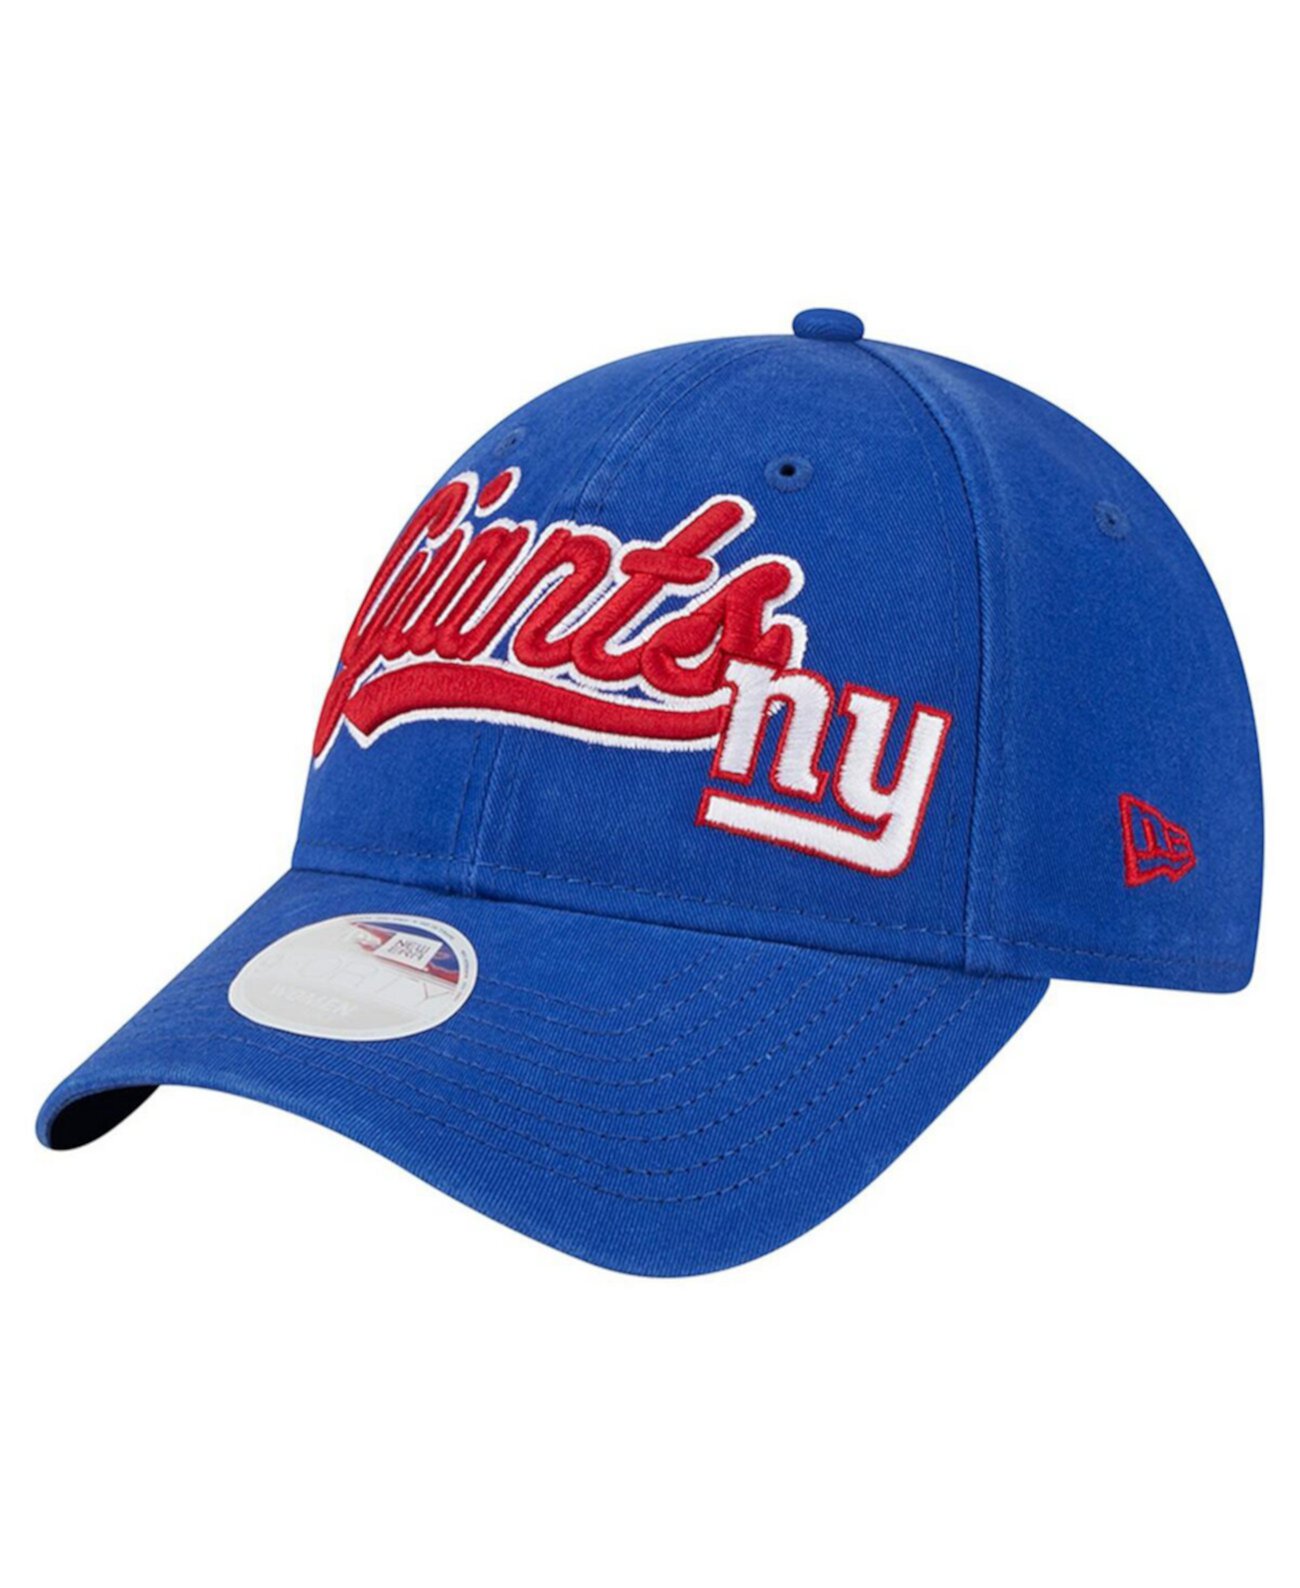 Women's Royal New York Giants Cheer 9FORTY Adjustable Hat New Era